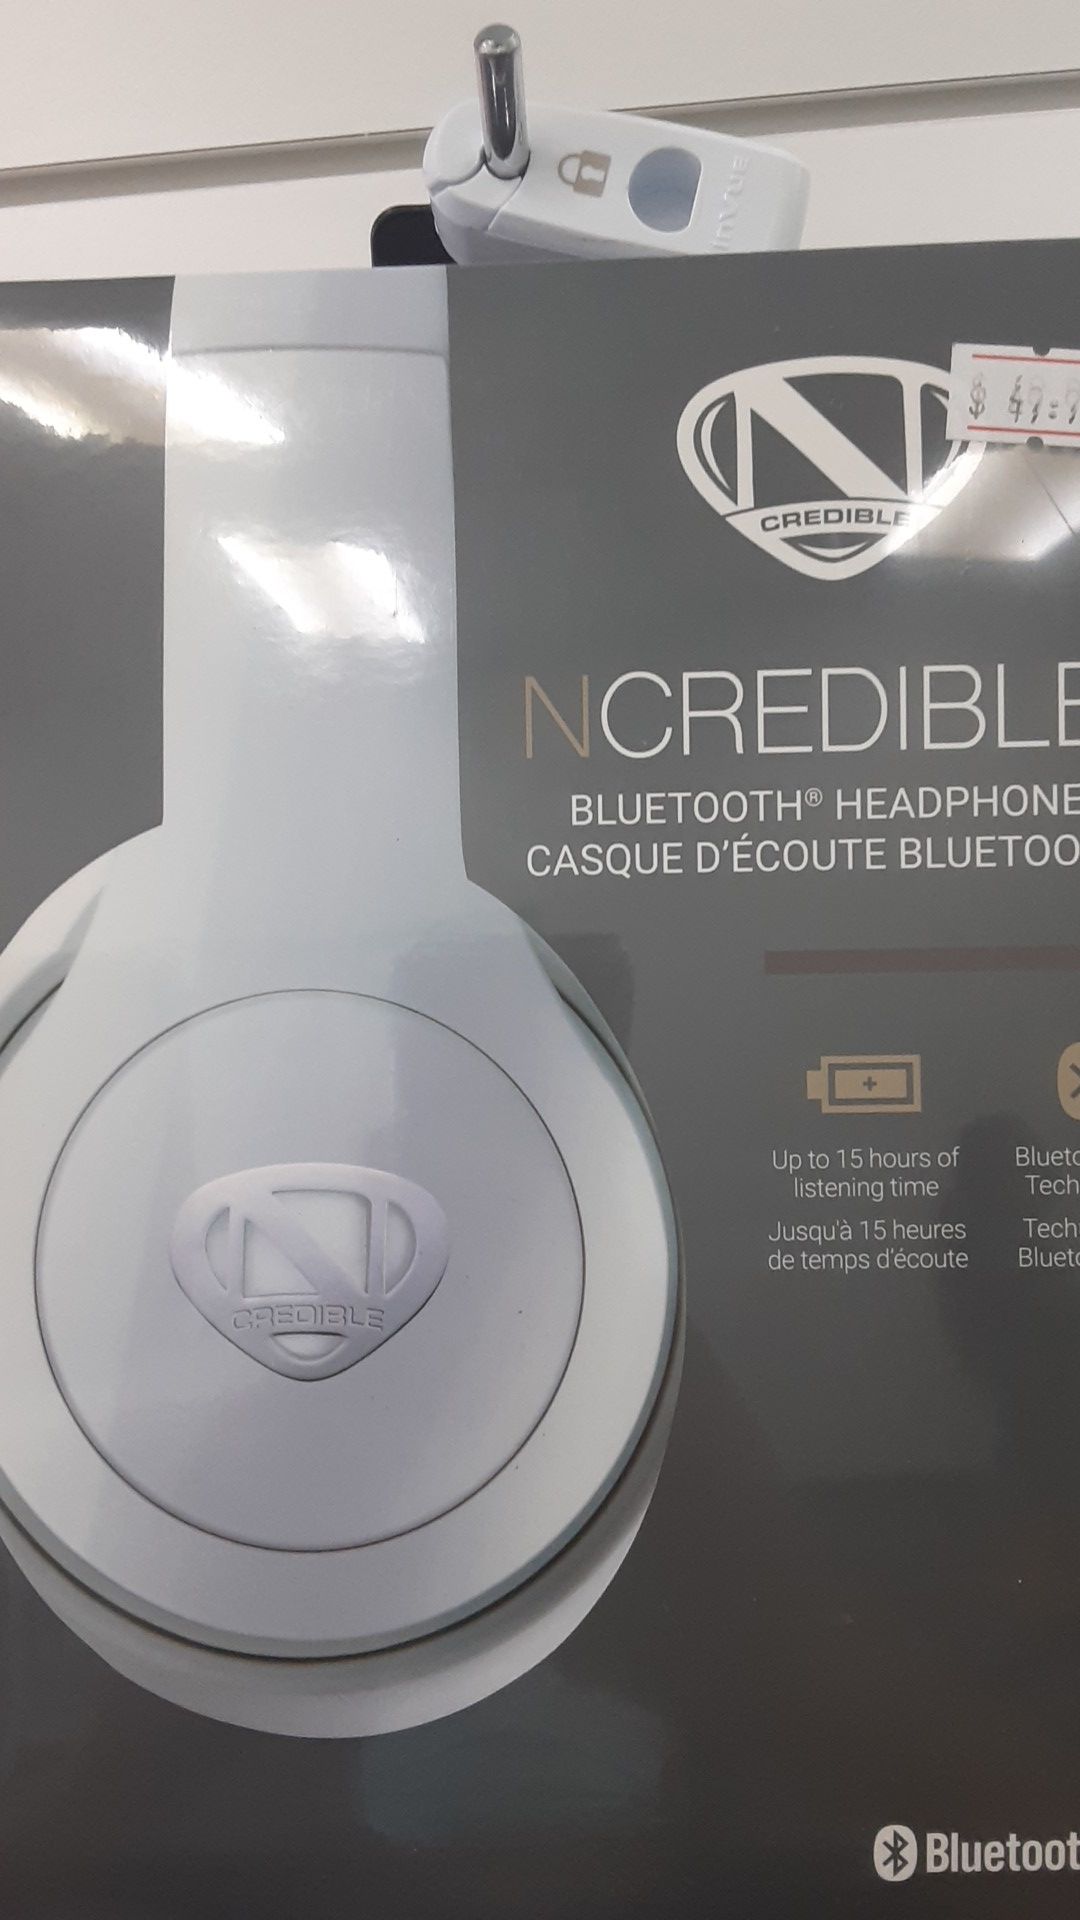 NCredible Bluetooth headphones